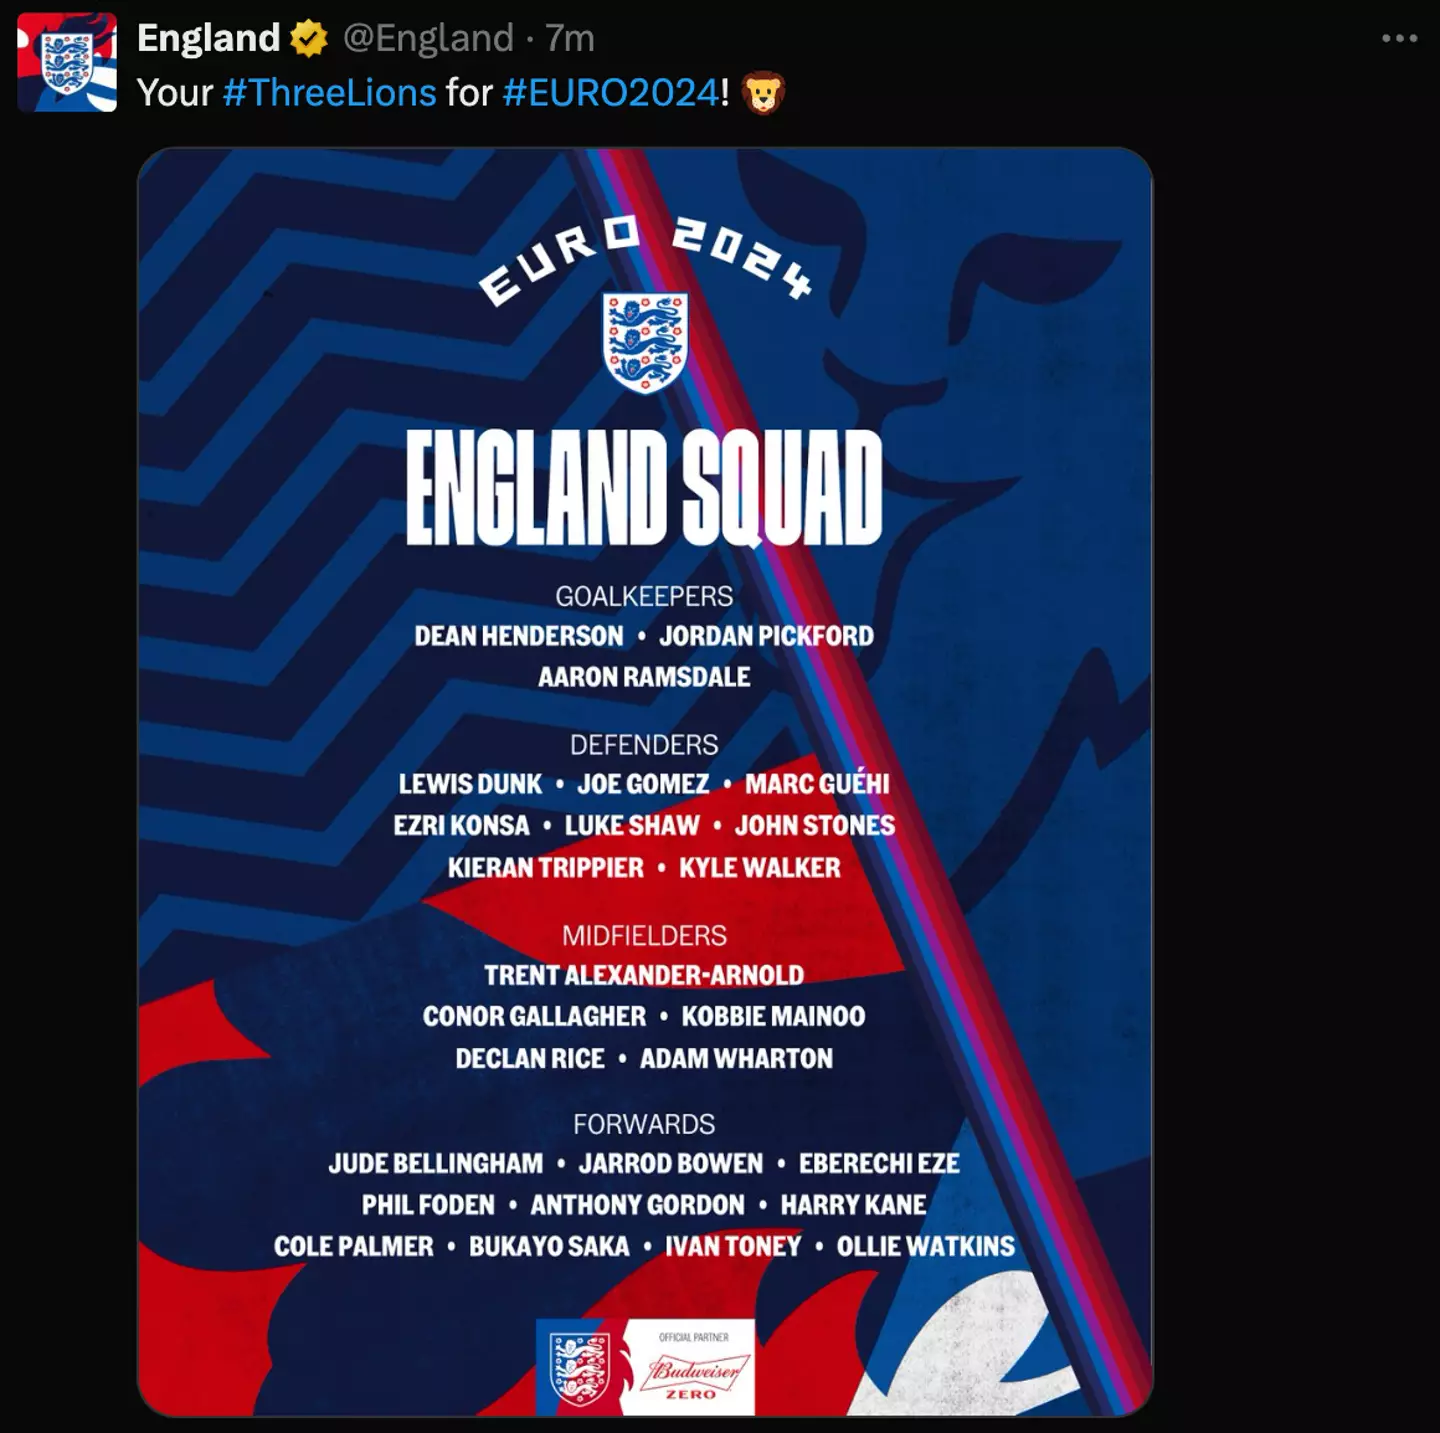 The full 26-man England squad (